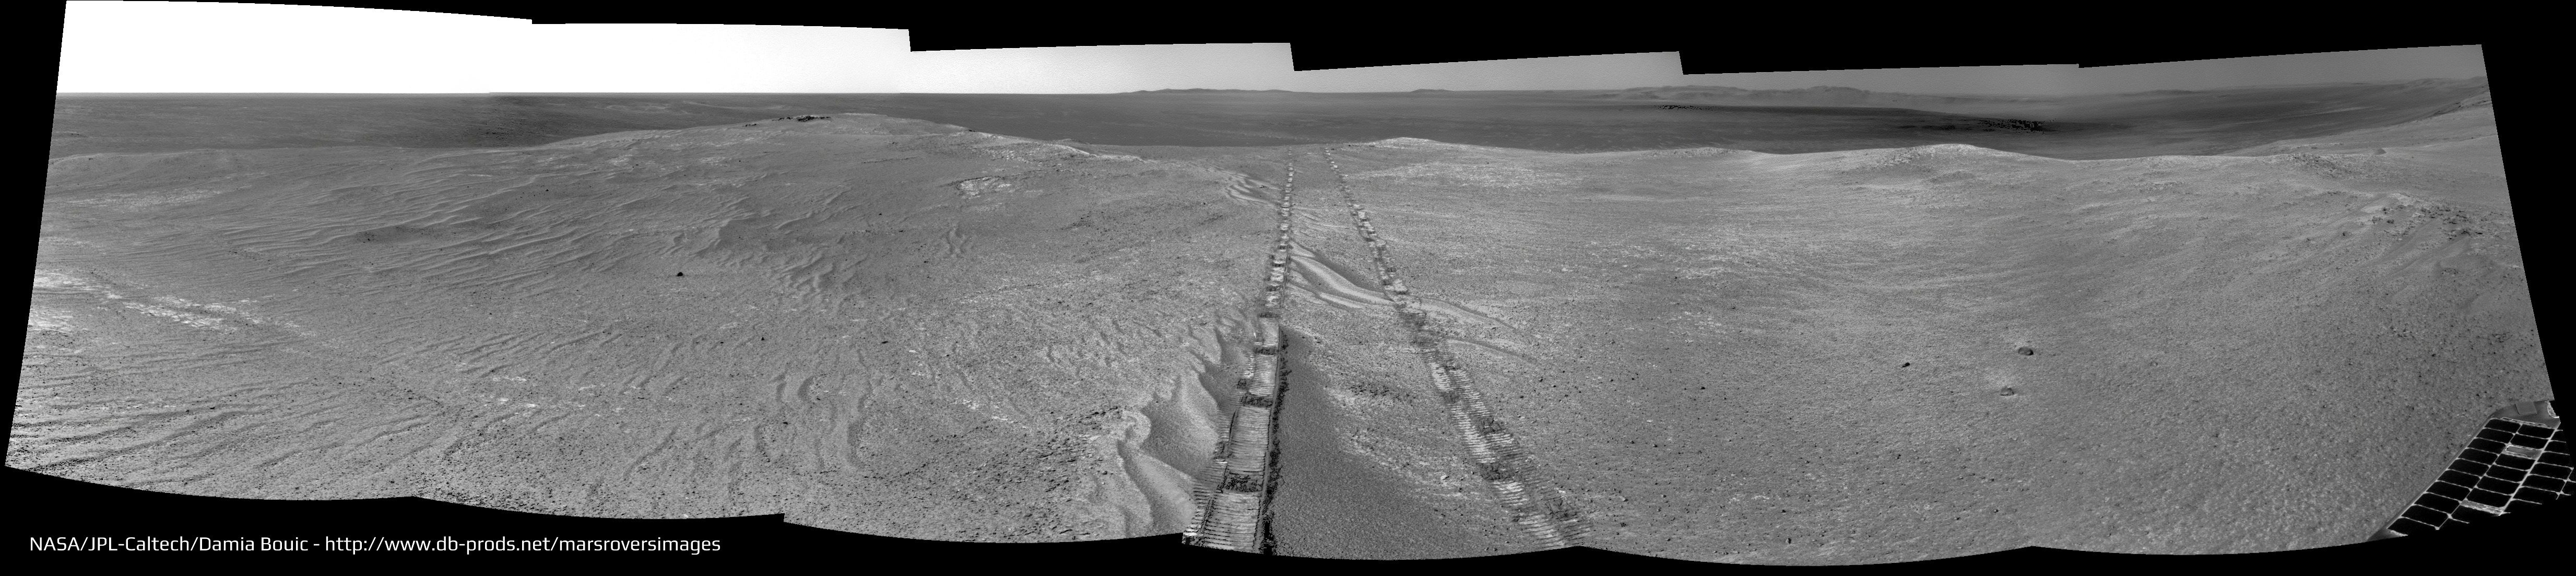 MARS: S putovanja rovera OPPORTUNITY  Sol3643_pano